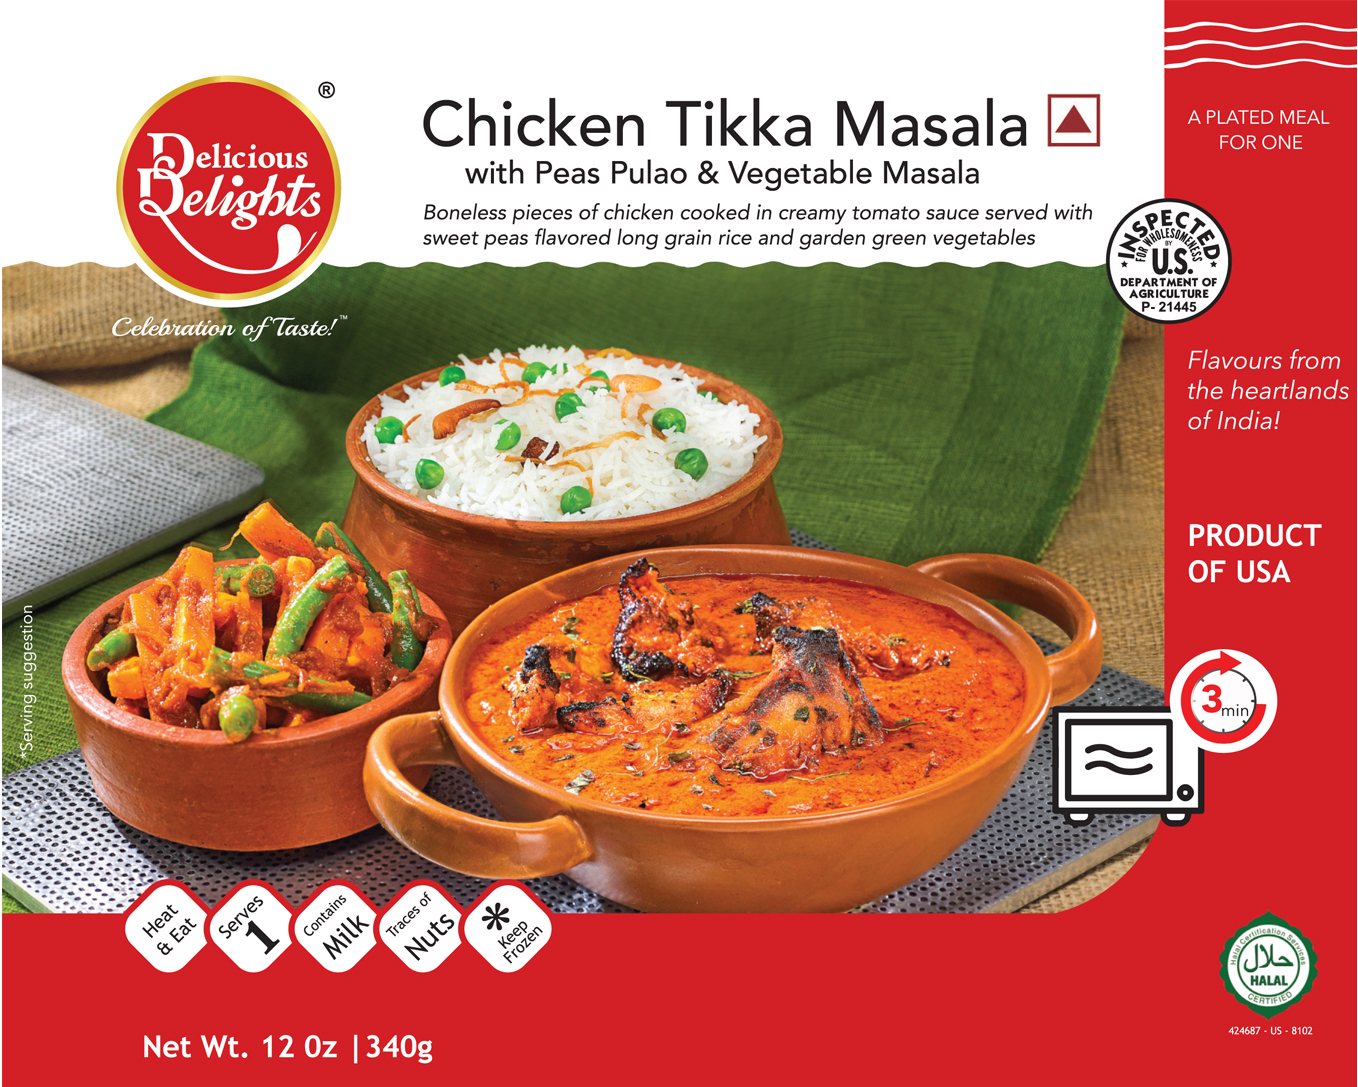 Delicious Delights Chicken Tikka Masala with Peas Pulao and Vegetable Masala